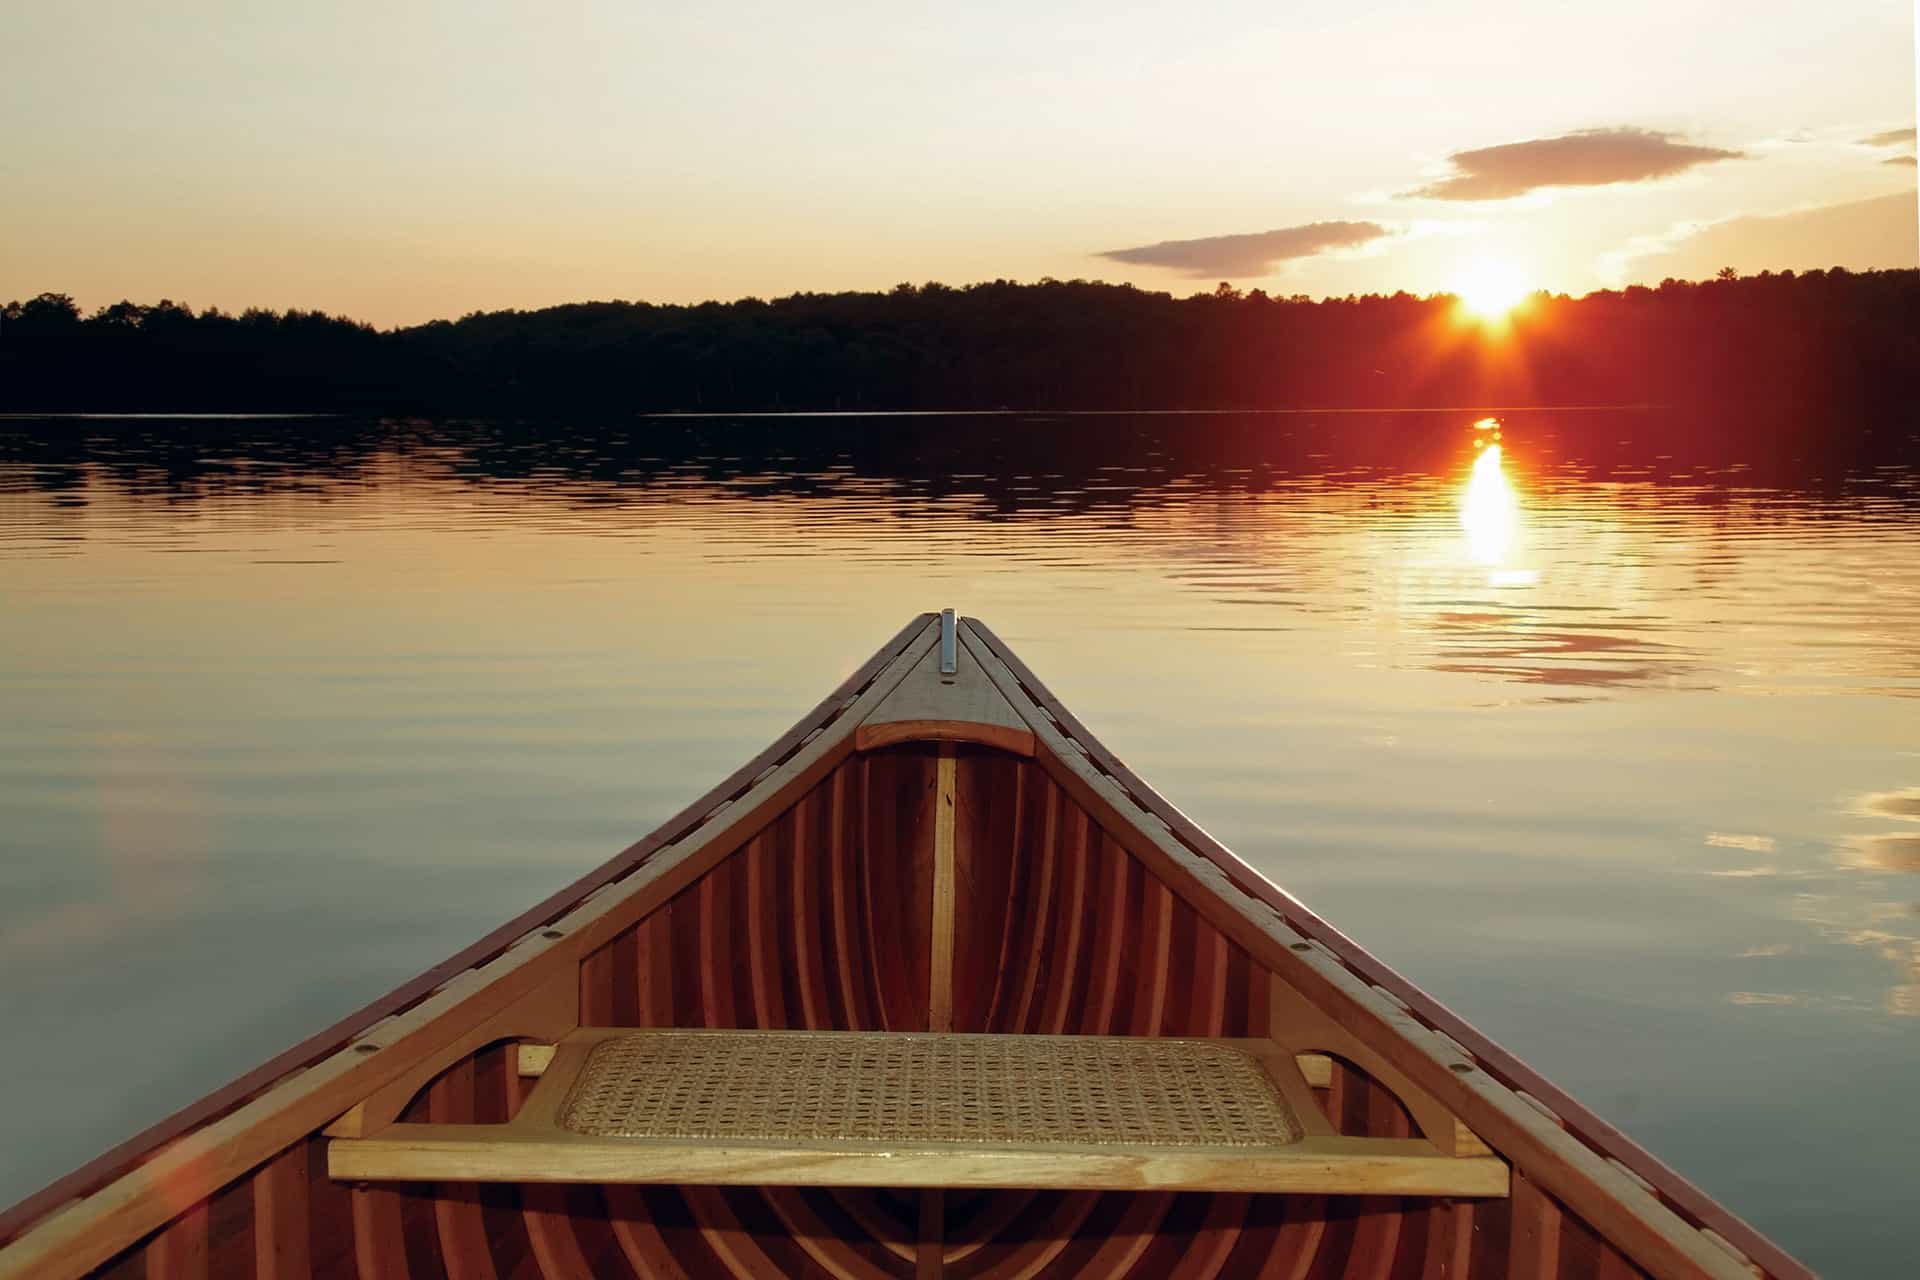 Canoe on water at sunset